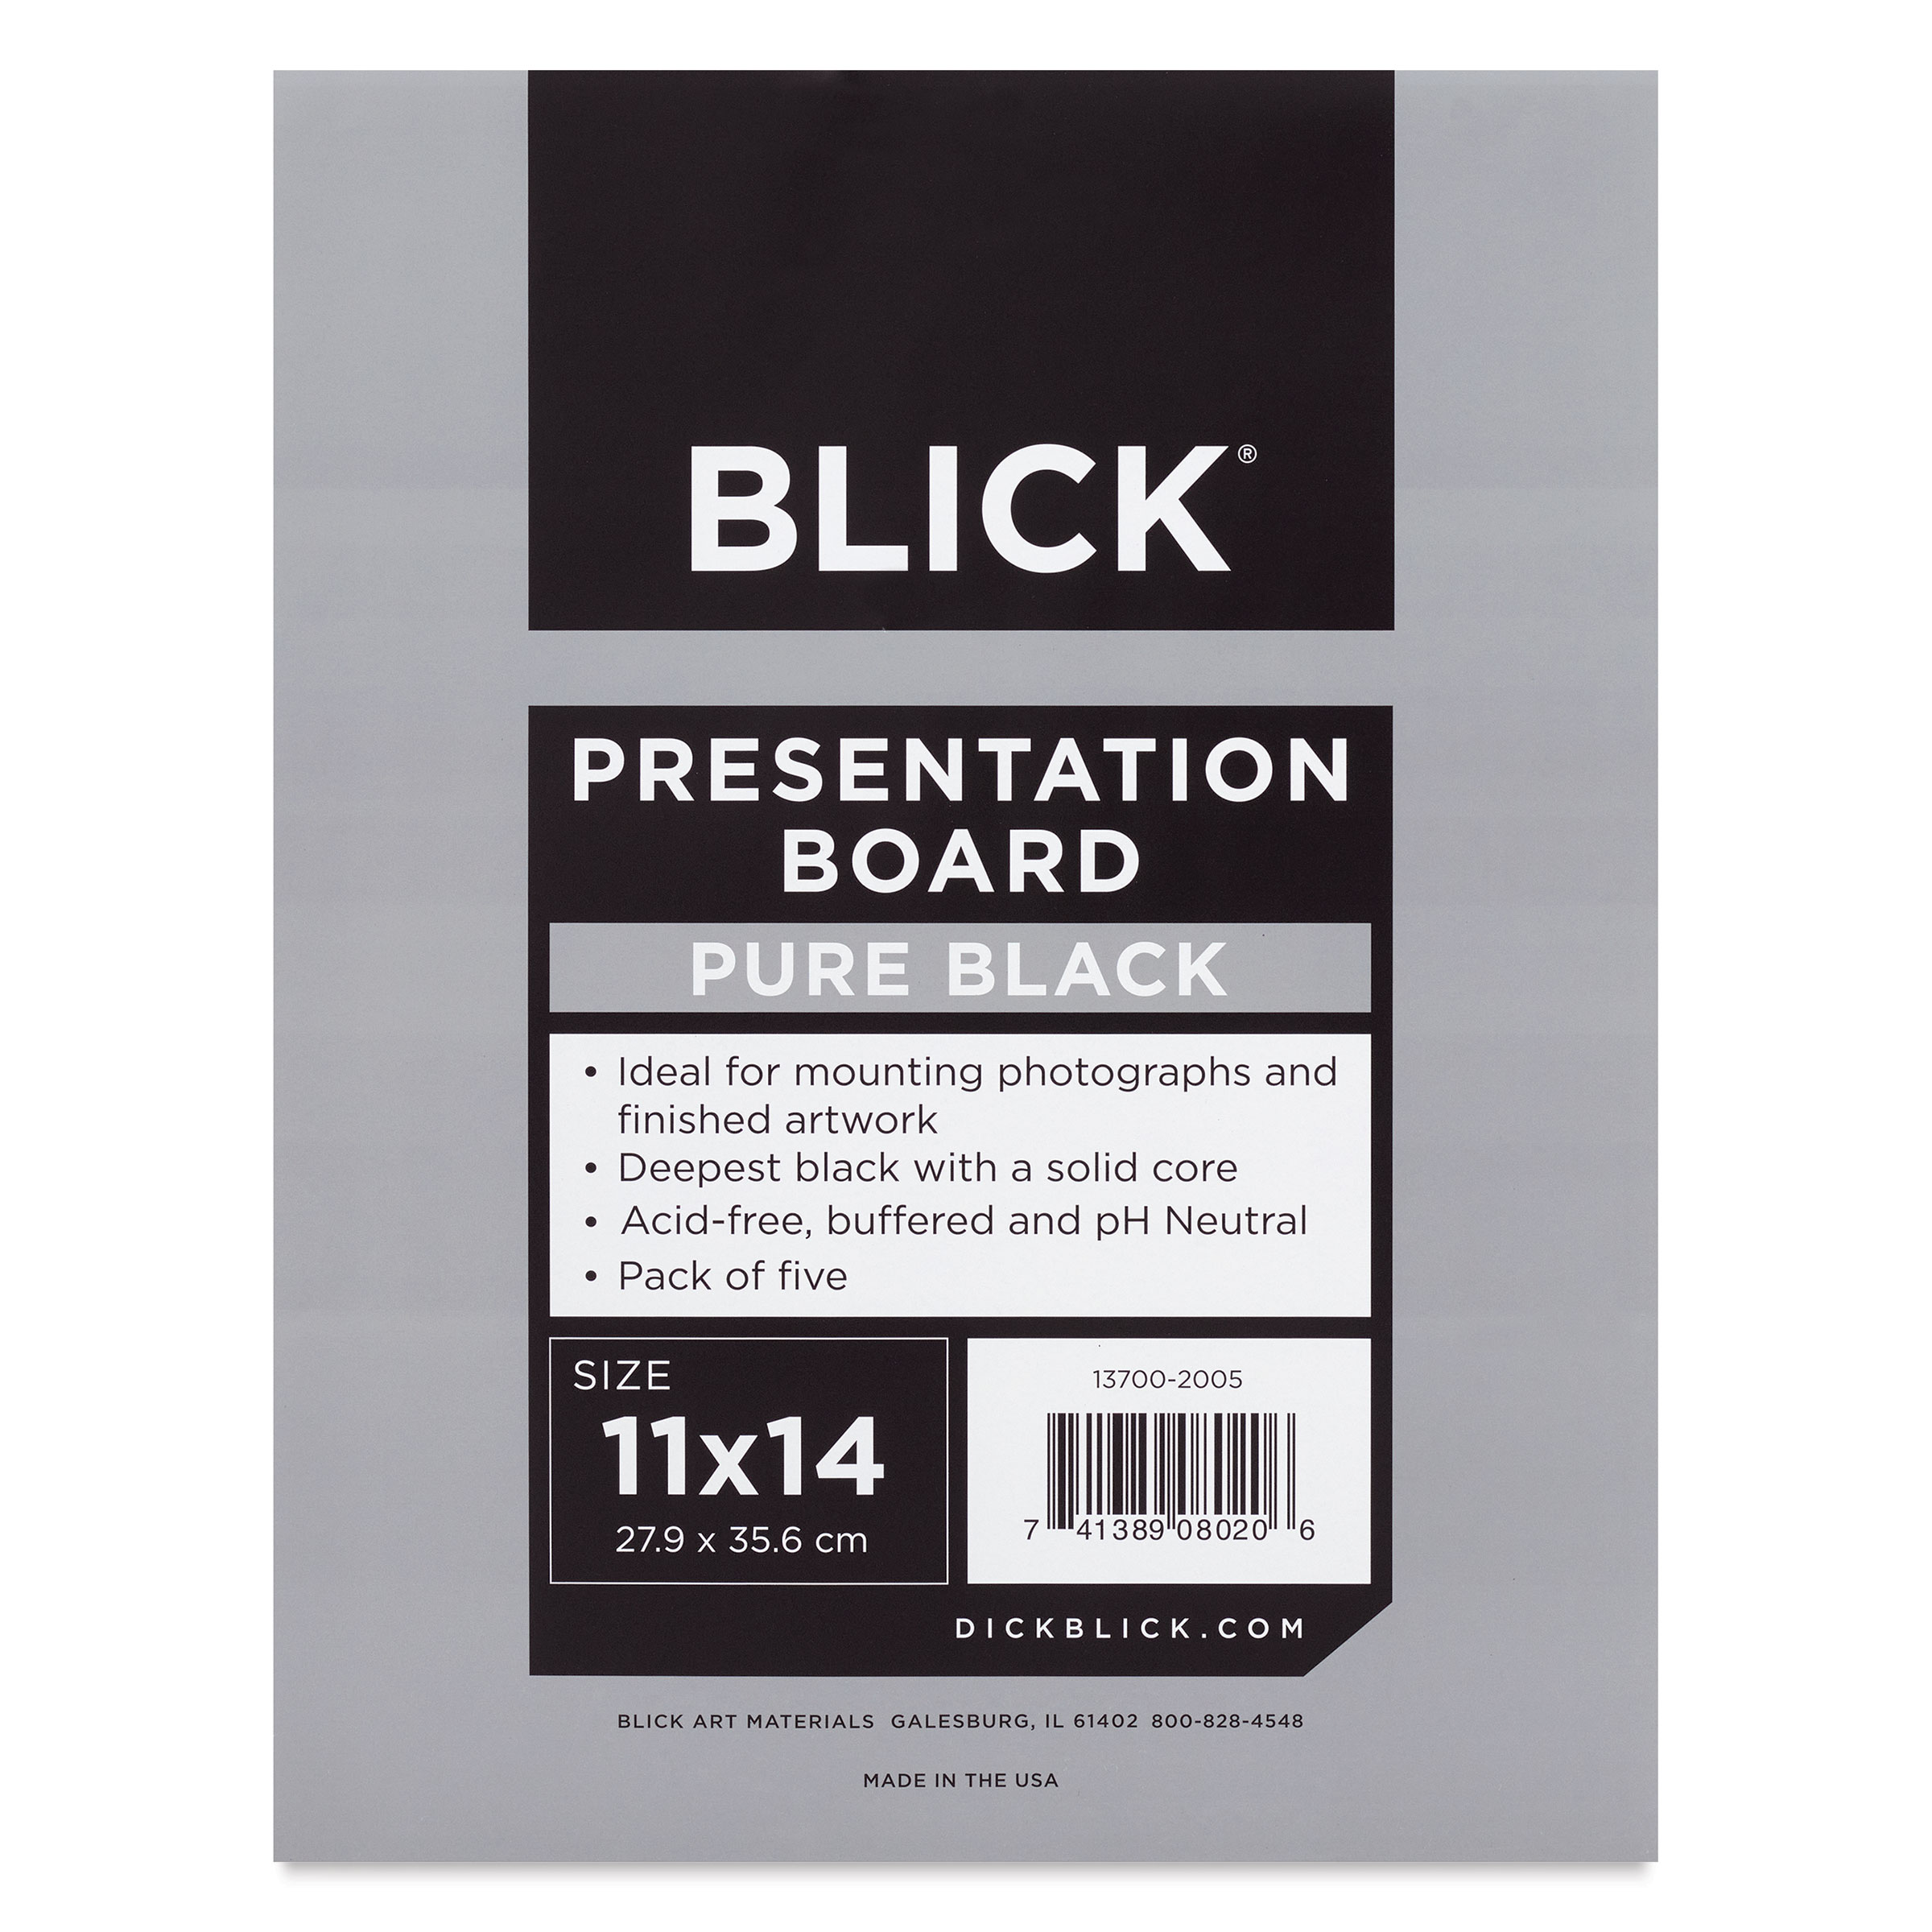 Blick Presentation Boards